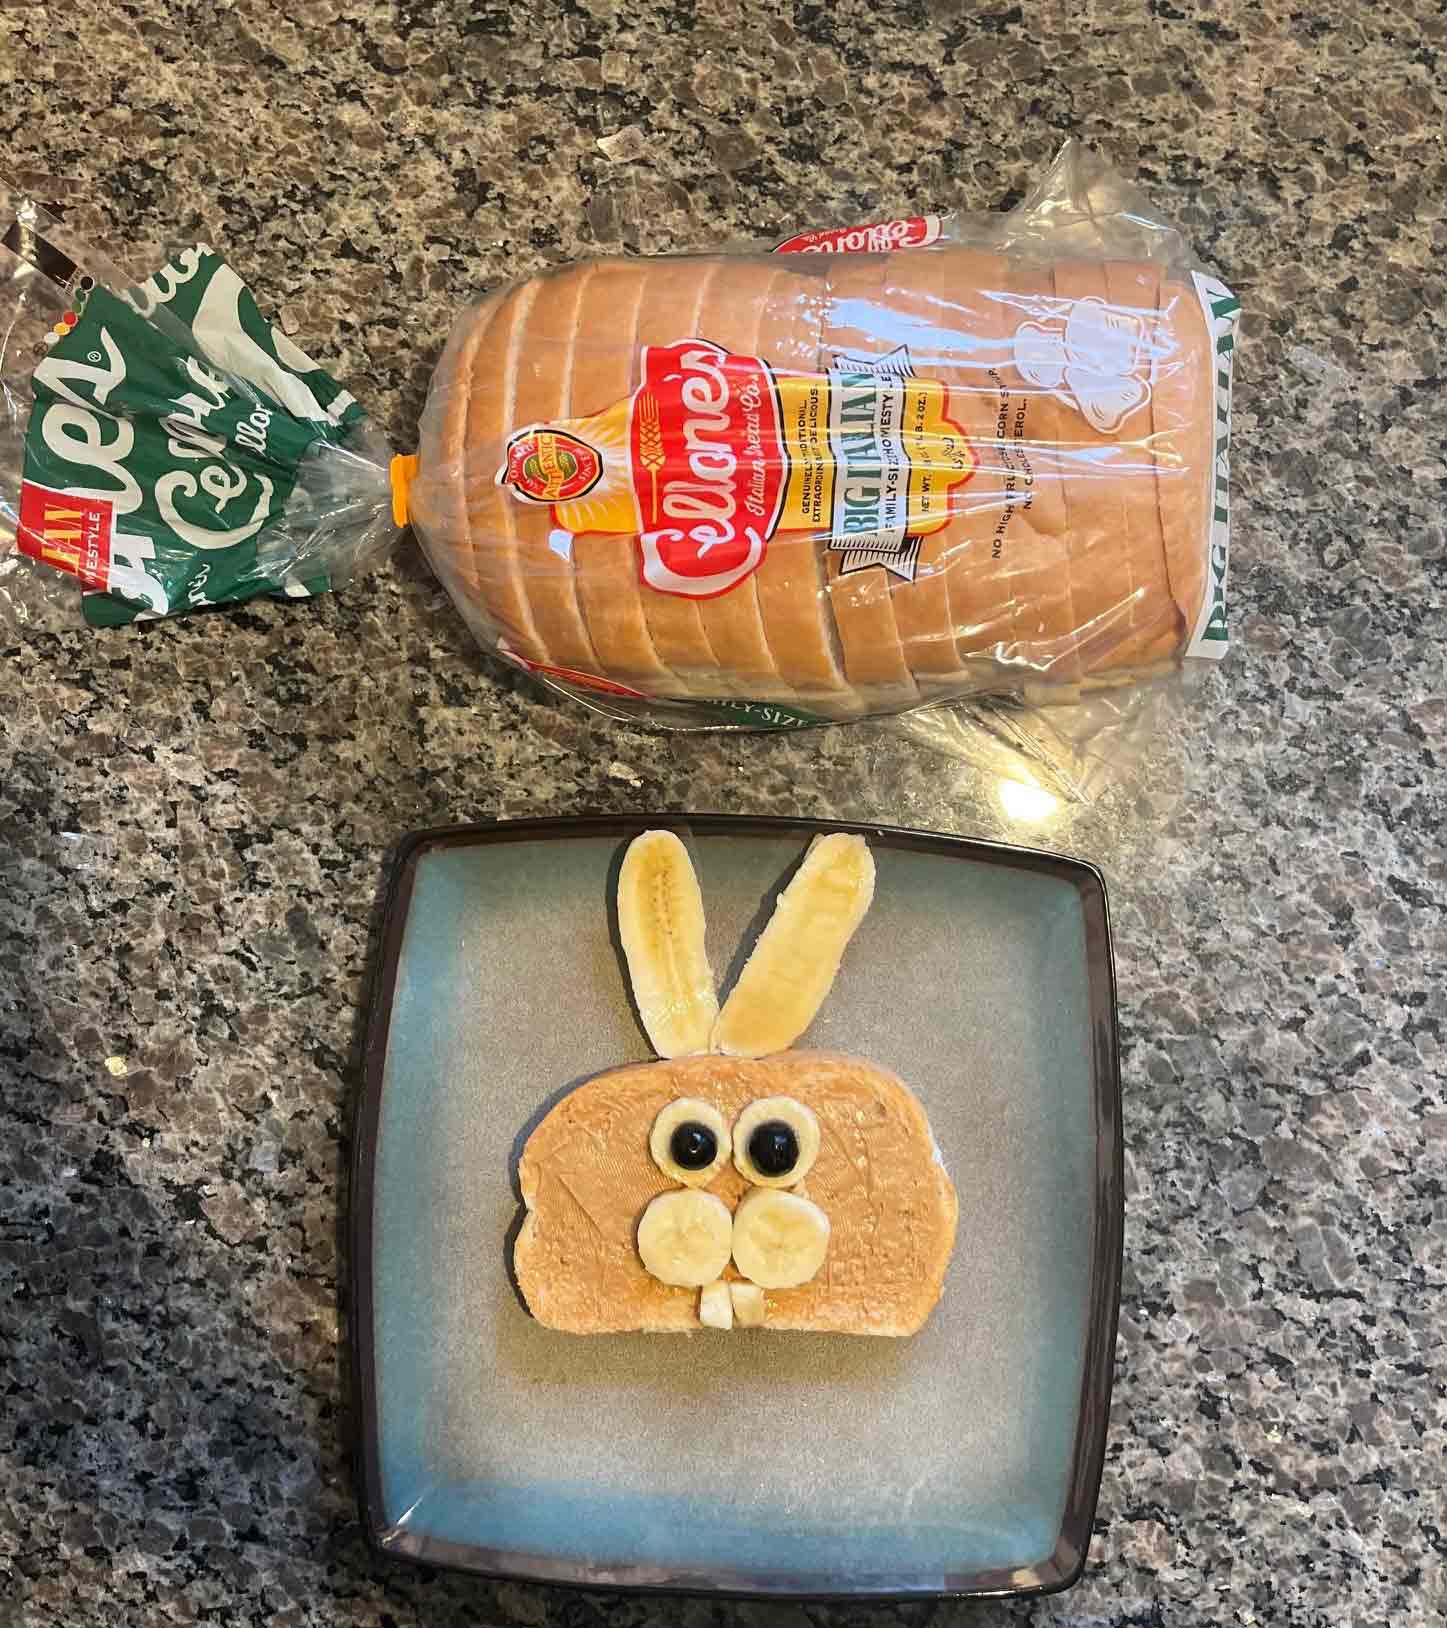 Bread that looks like a rabbit